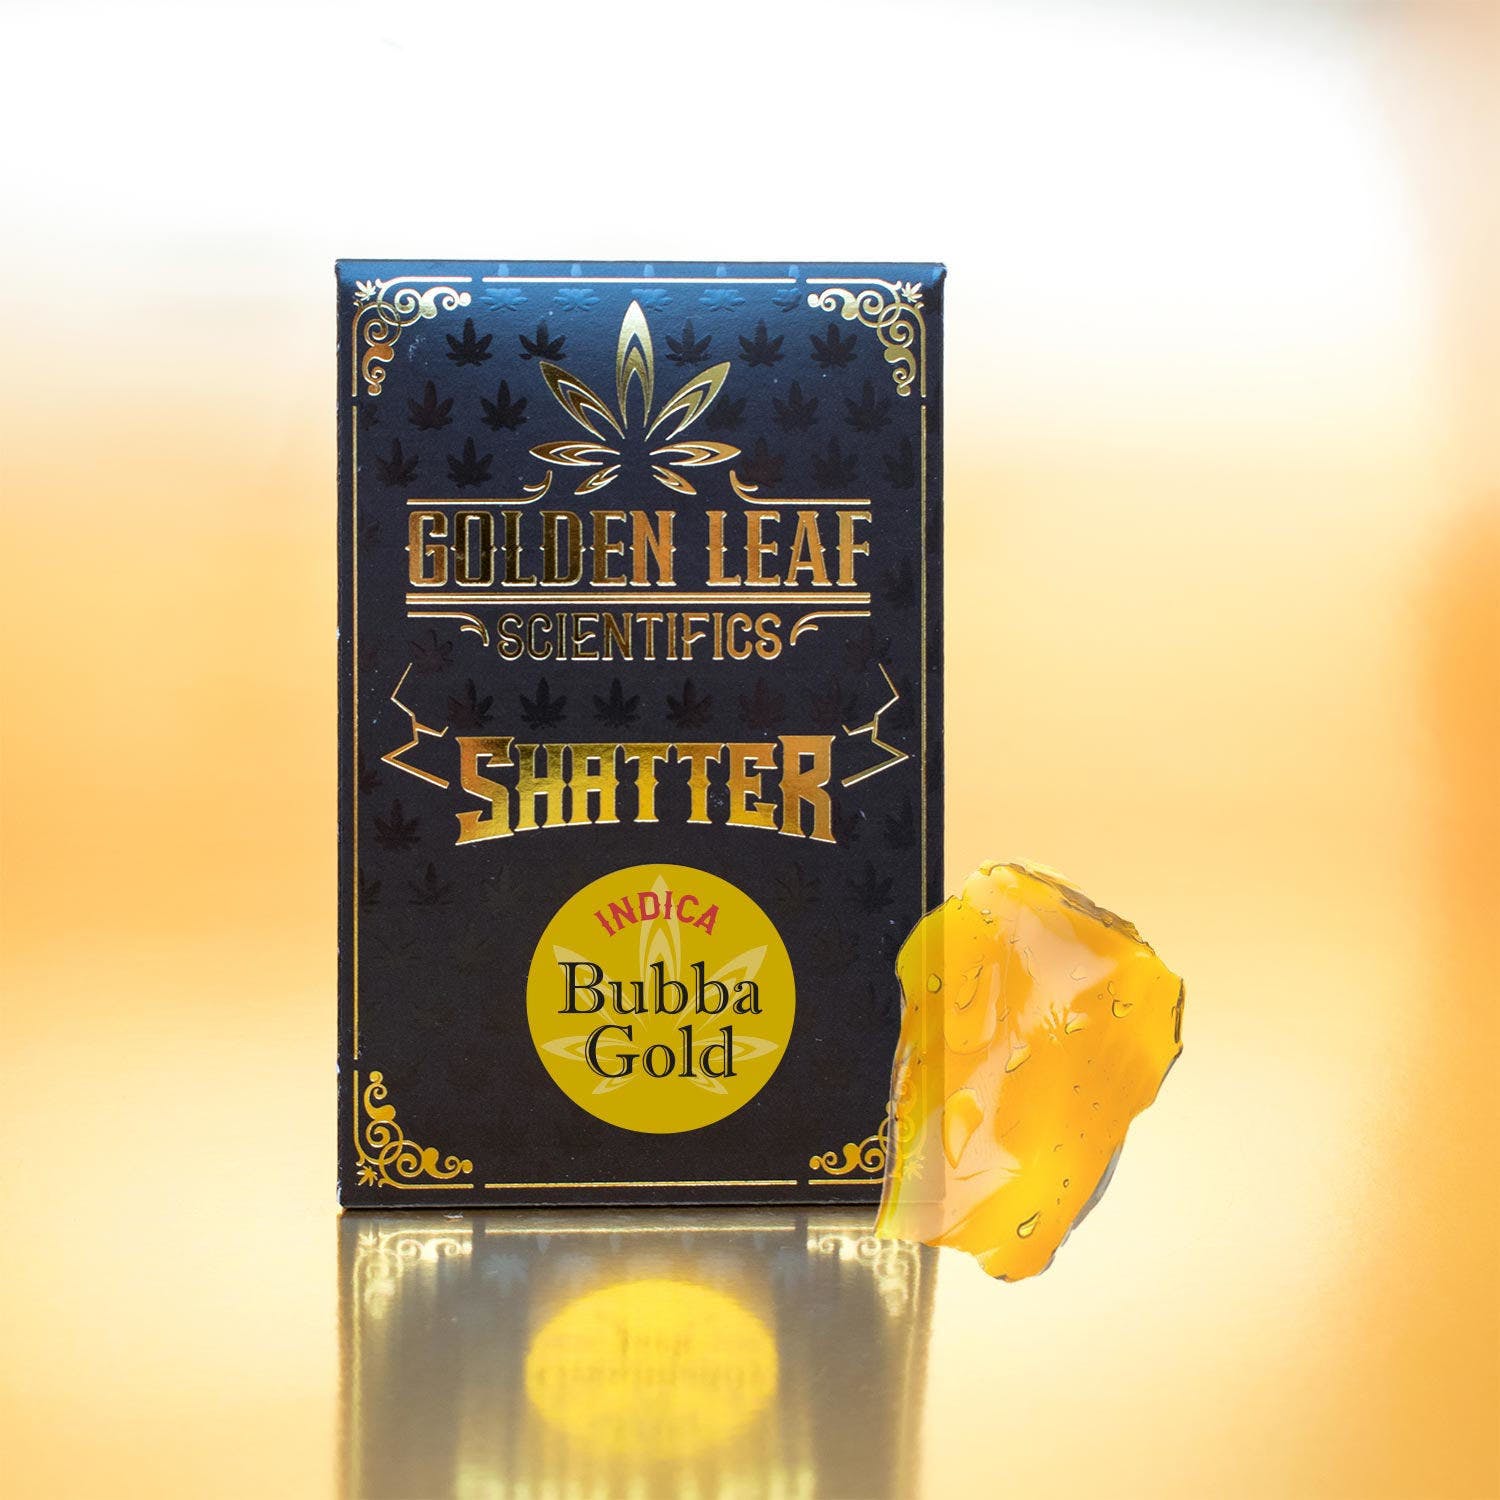 wax-golden-leaf-scientifics-bubba-gold-shatter